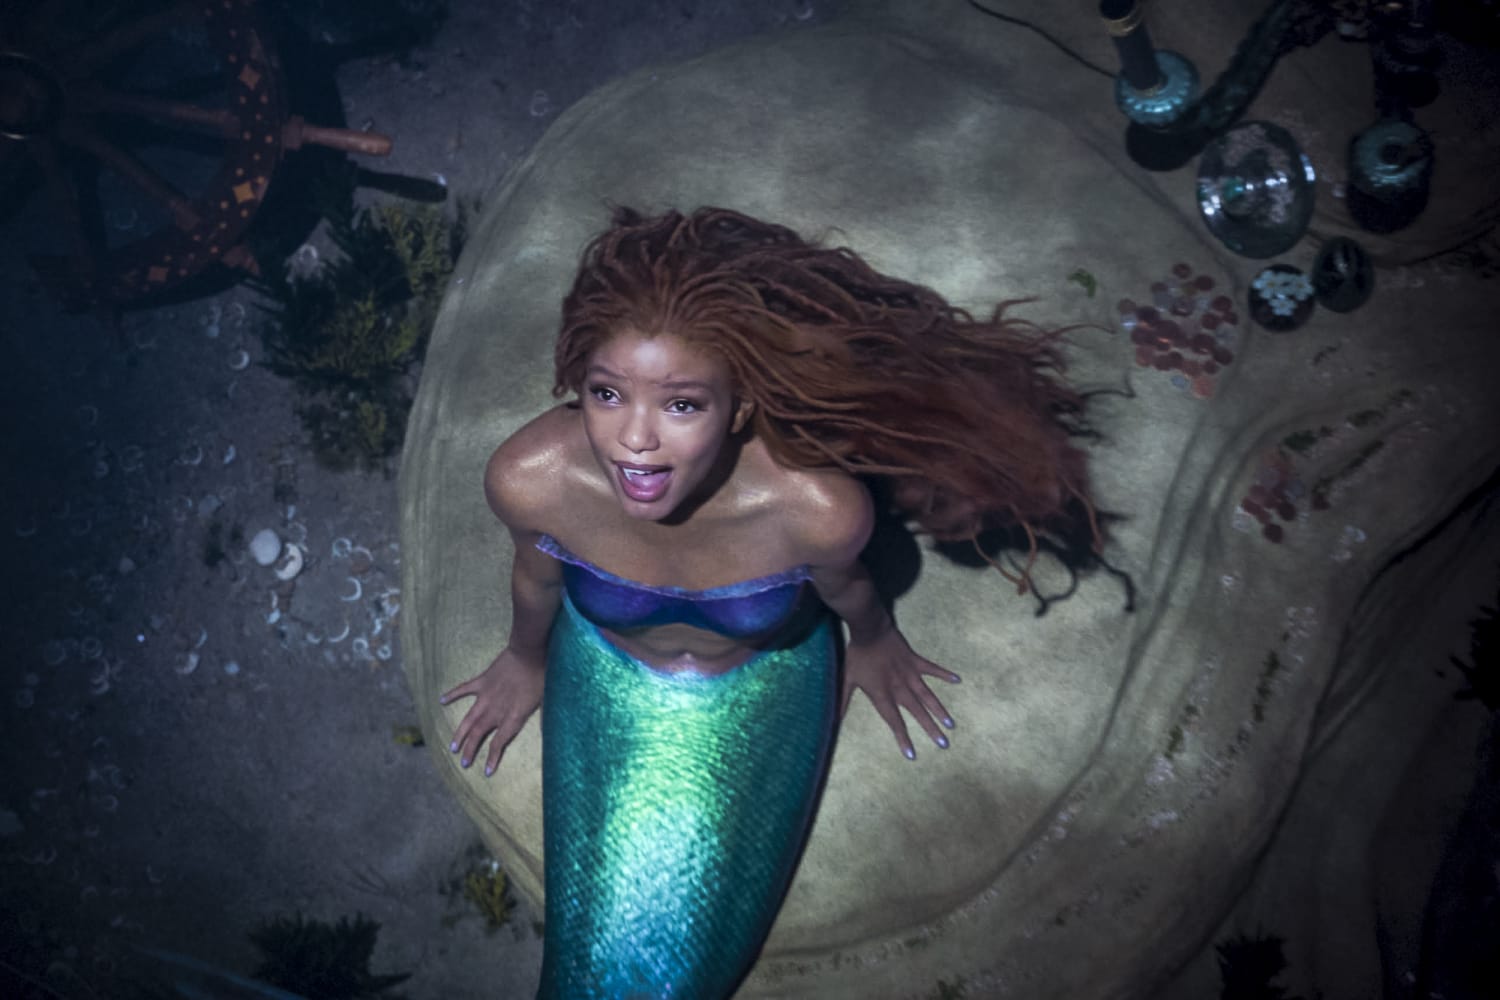 'The Little Mermaid' makes box office splash with $95.5 million opening